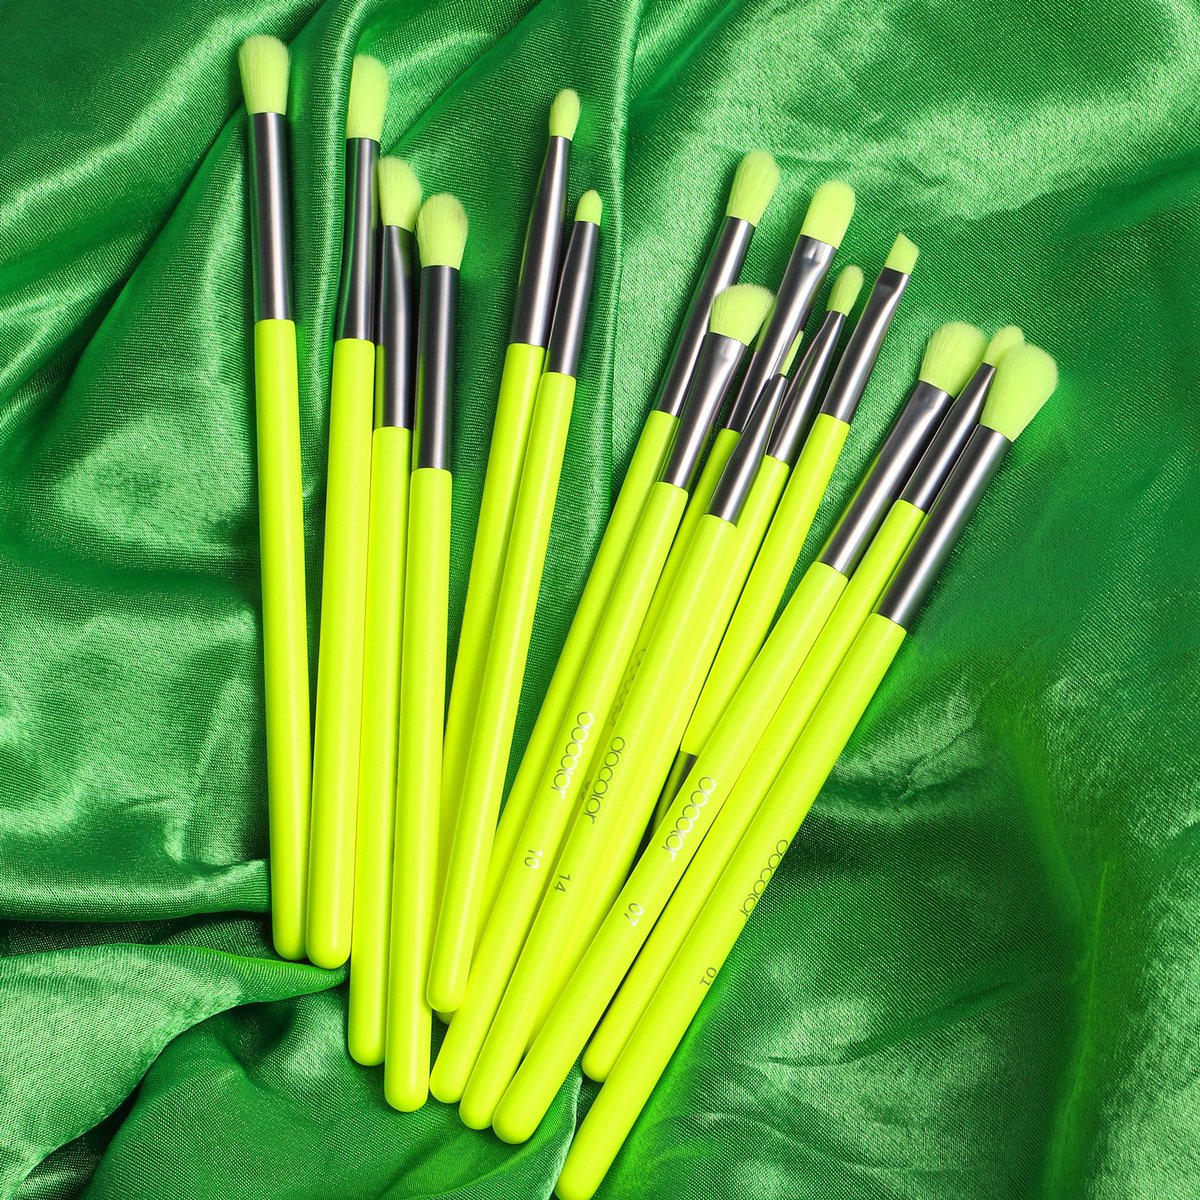 🍀🍀Docolor wholesale Original-✨✨The neon green makeup brush set 15pcs eye makeup brushes N1504, welcome inquiry.❤️❤️

#Docolor #Docolorwholesale #docolororiginal #neon #neongreen #makeup #makeupbrushset #eyemakeup #makeupbrushes #eyebrushes